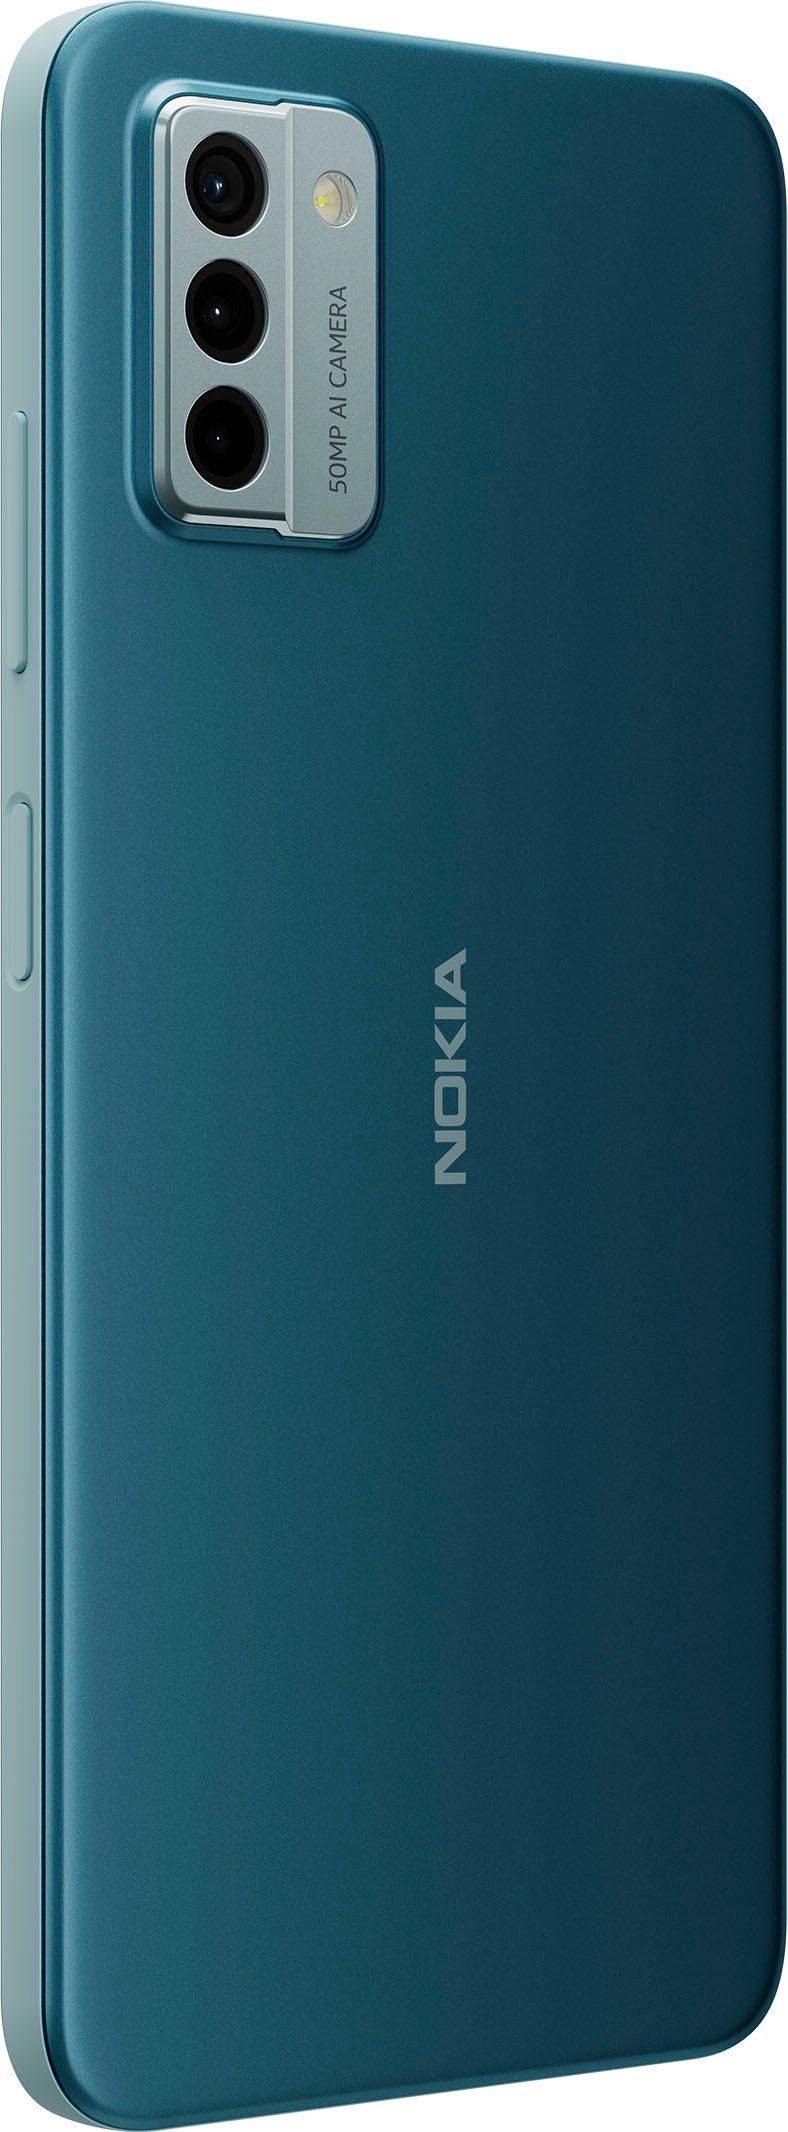 Nokia G22 Smartphone Speicherplatz, Kamera) GB (16,56 Zoll, 64 cm/6,52 MP Blue 50 Lagoon